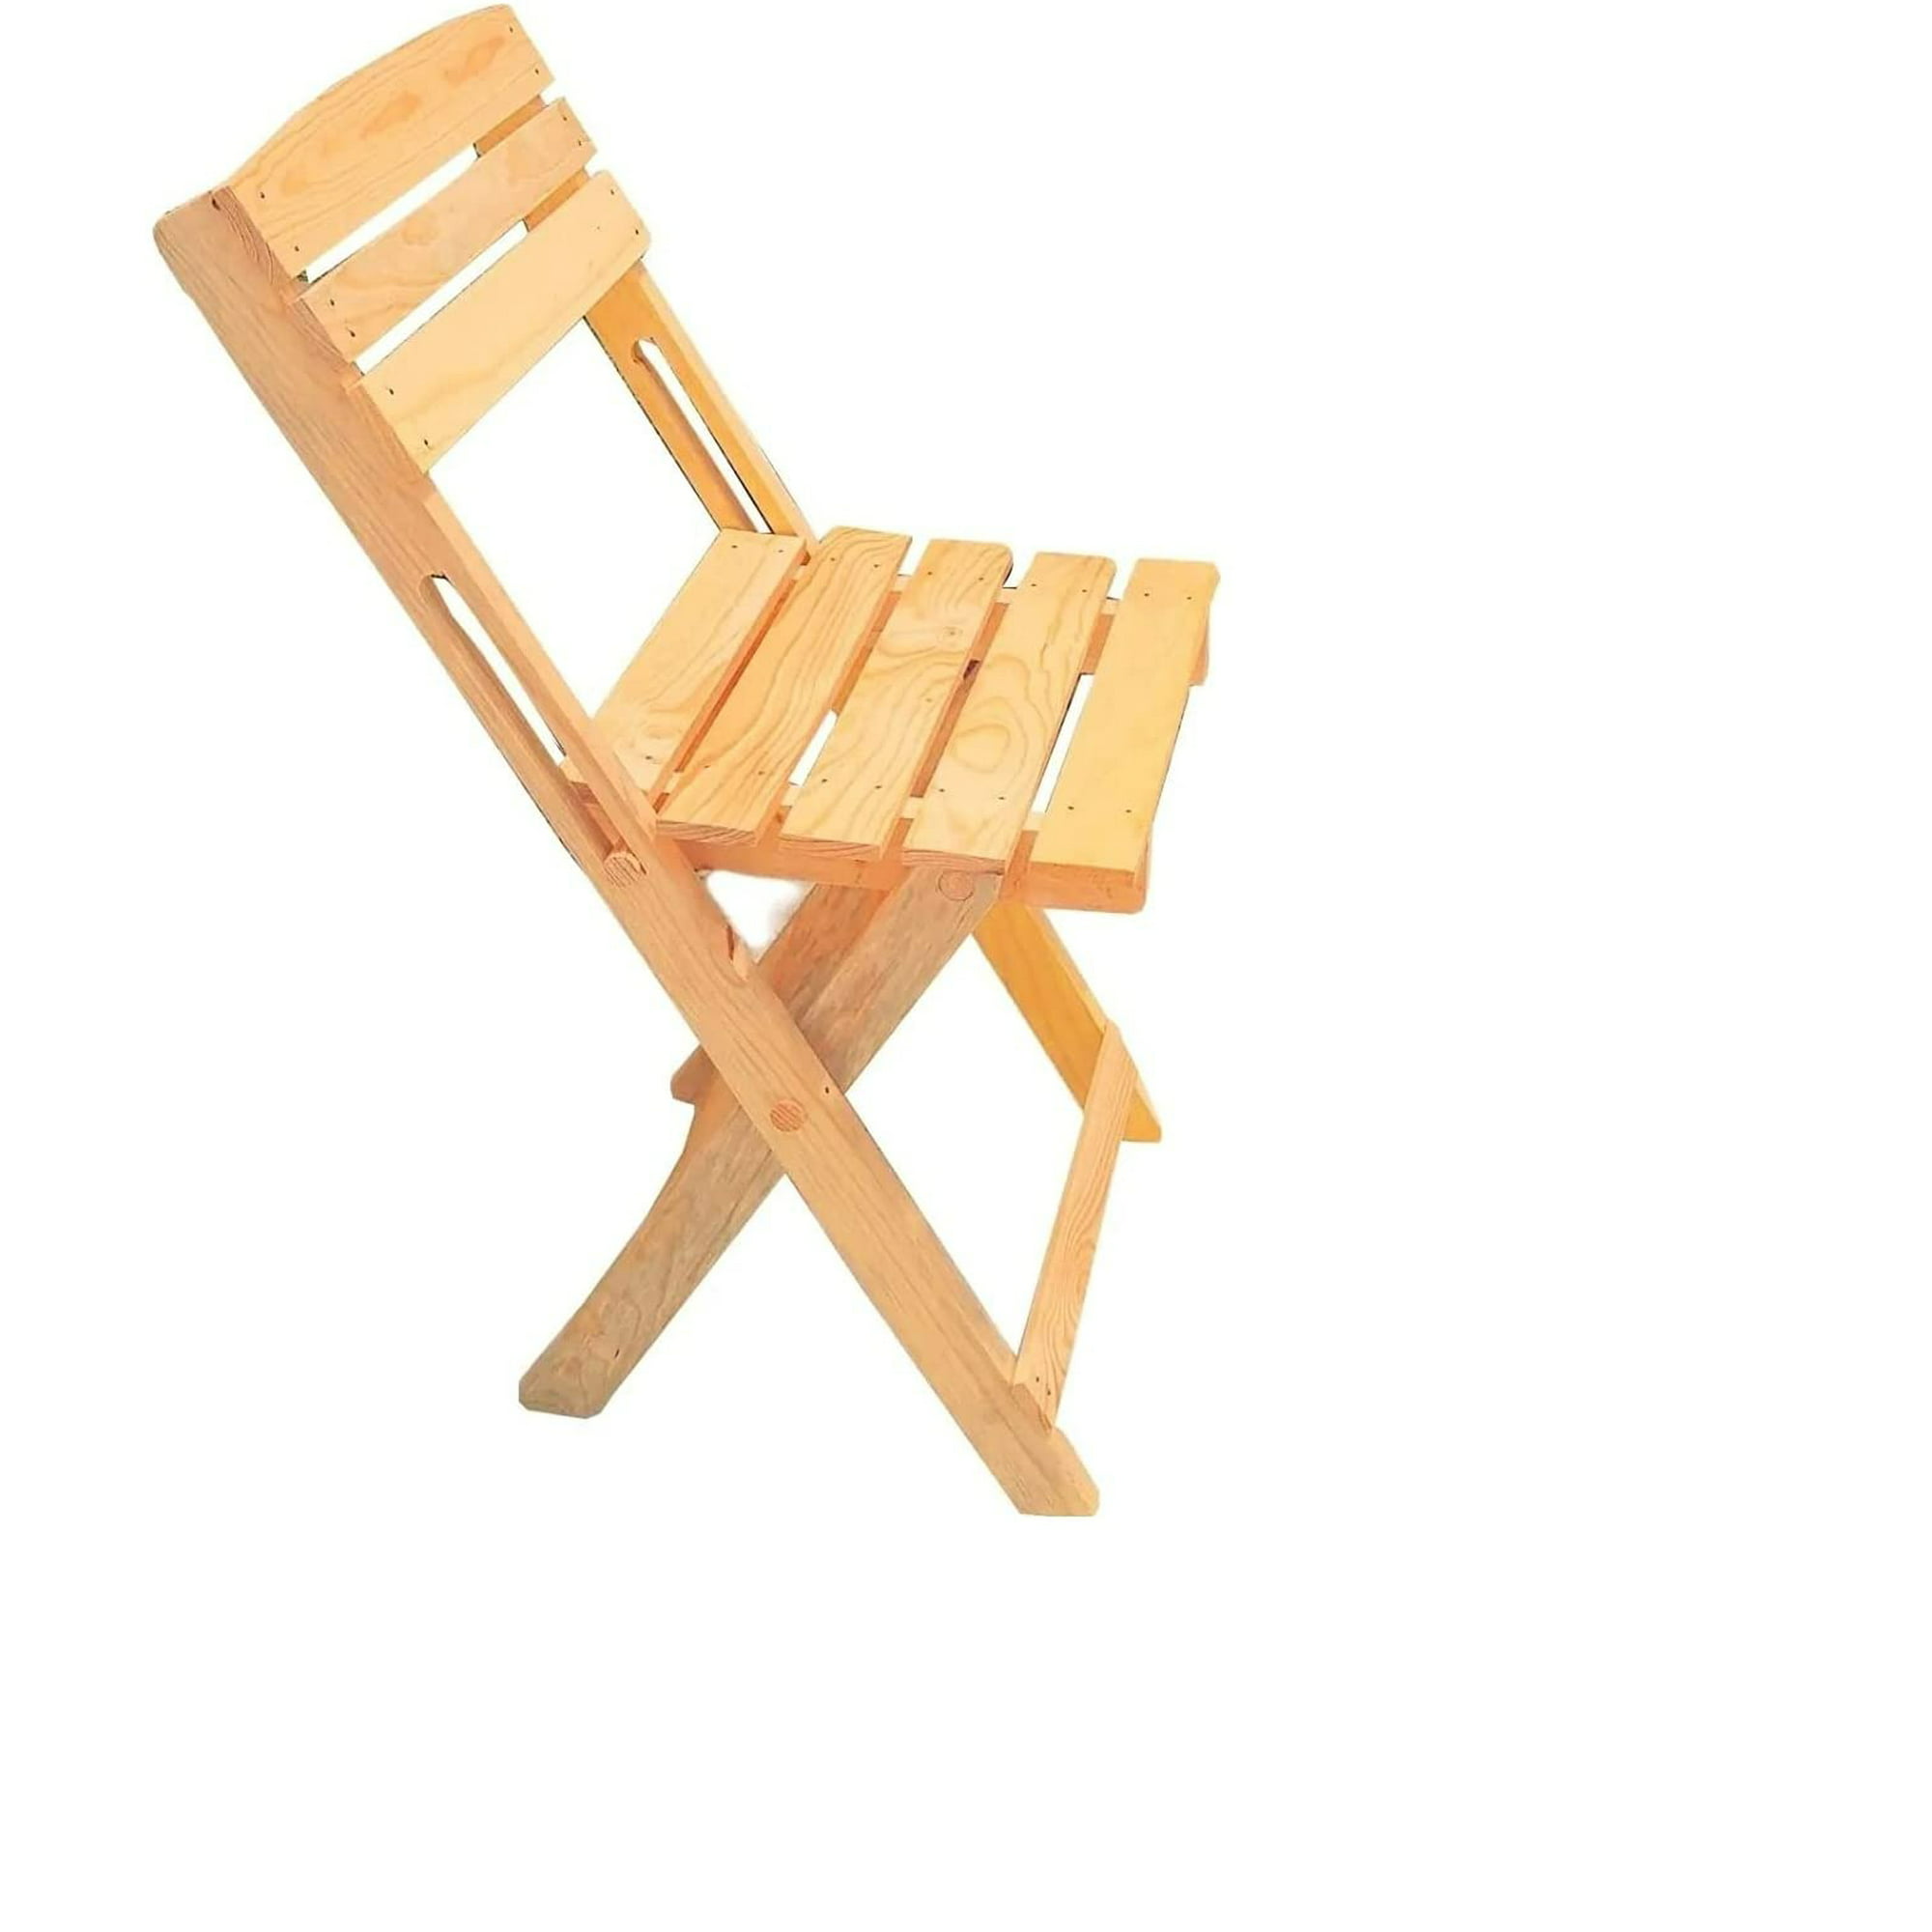  Asiento plegable Silla plegable reclinable silla de